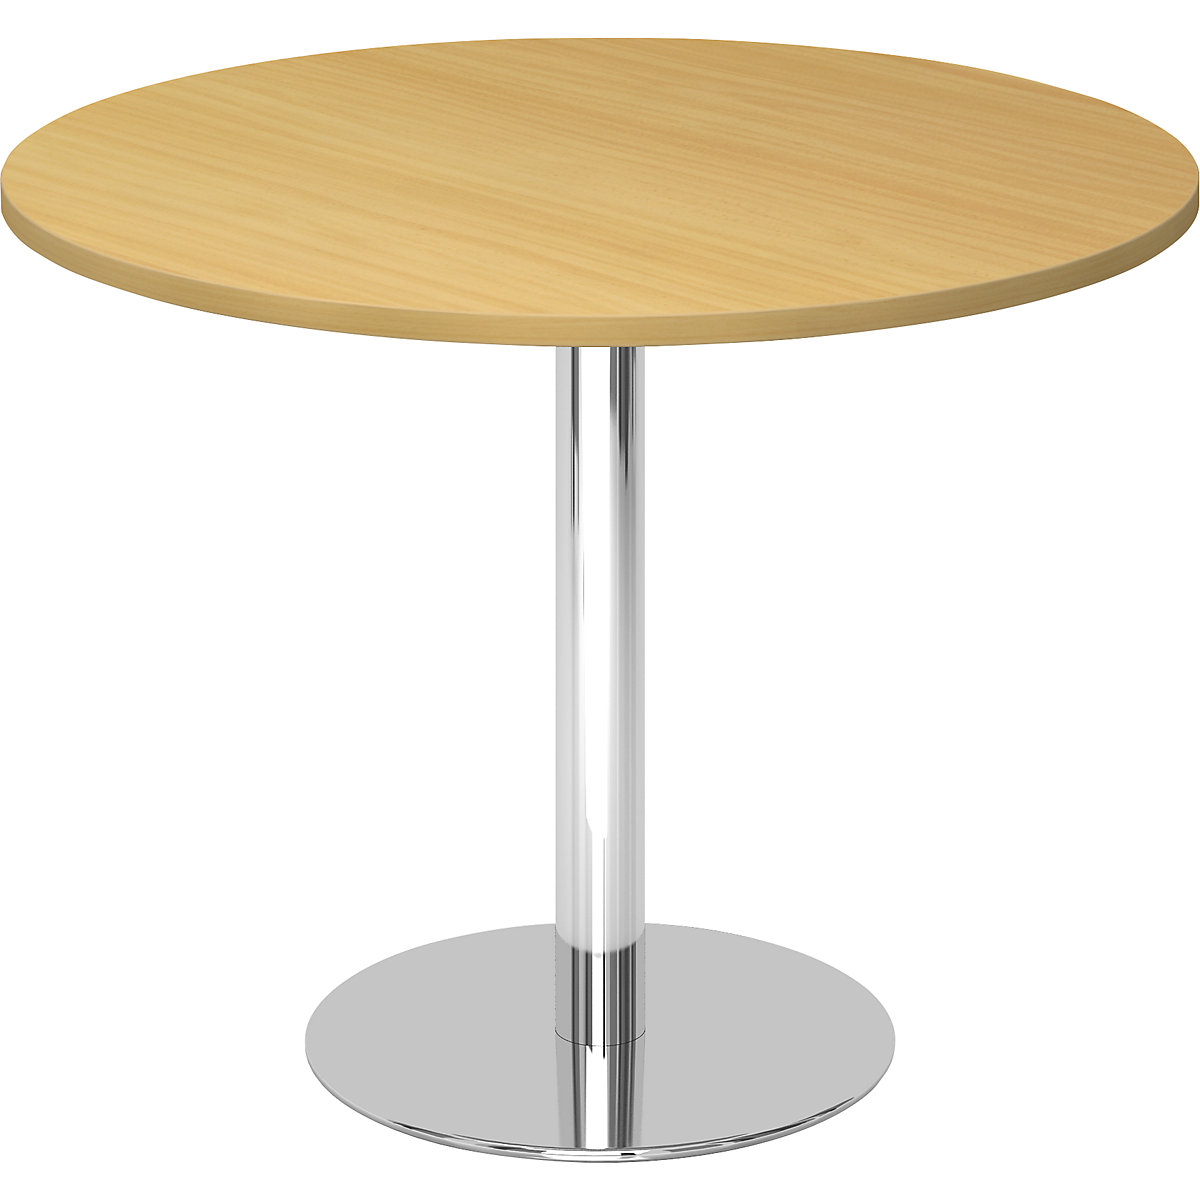 Konferencijski stol, Ø 1000 mm, visina 755 mm, kromirano postolje, ploča u imitaciji bukve-4